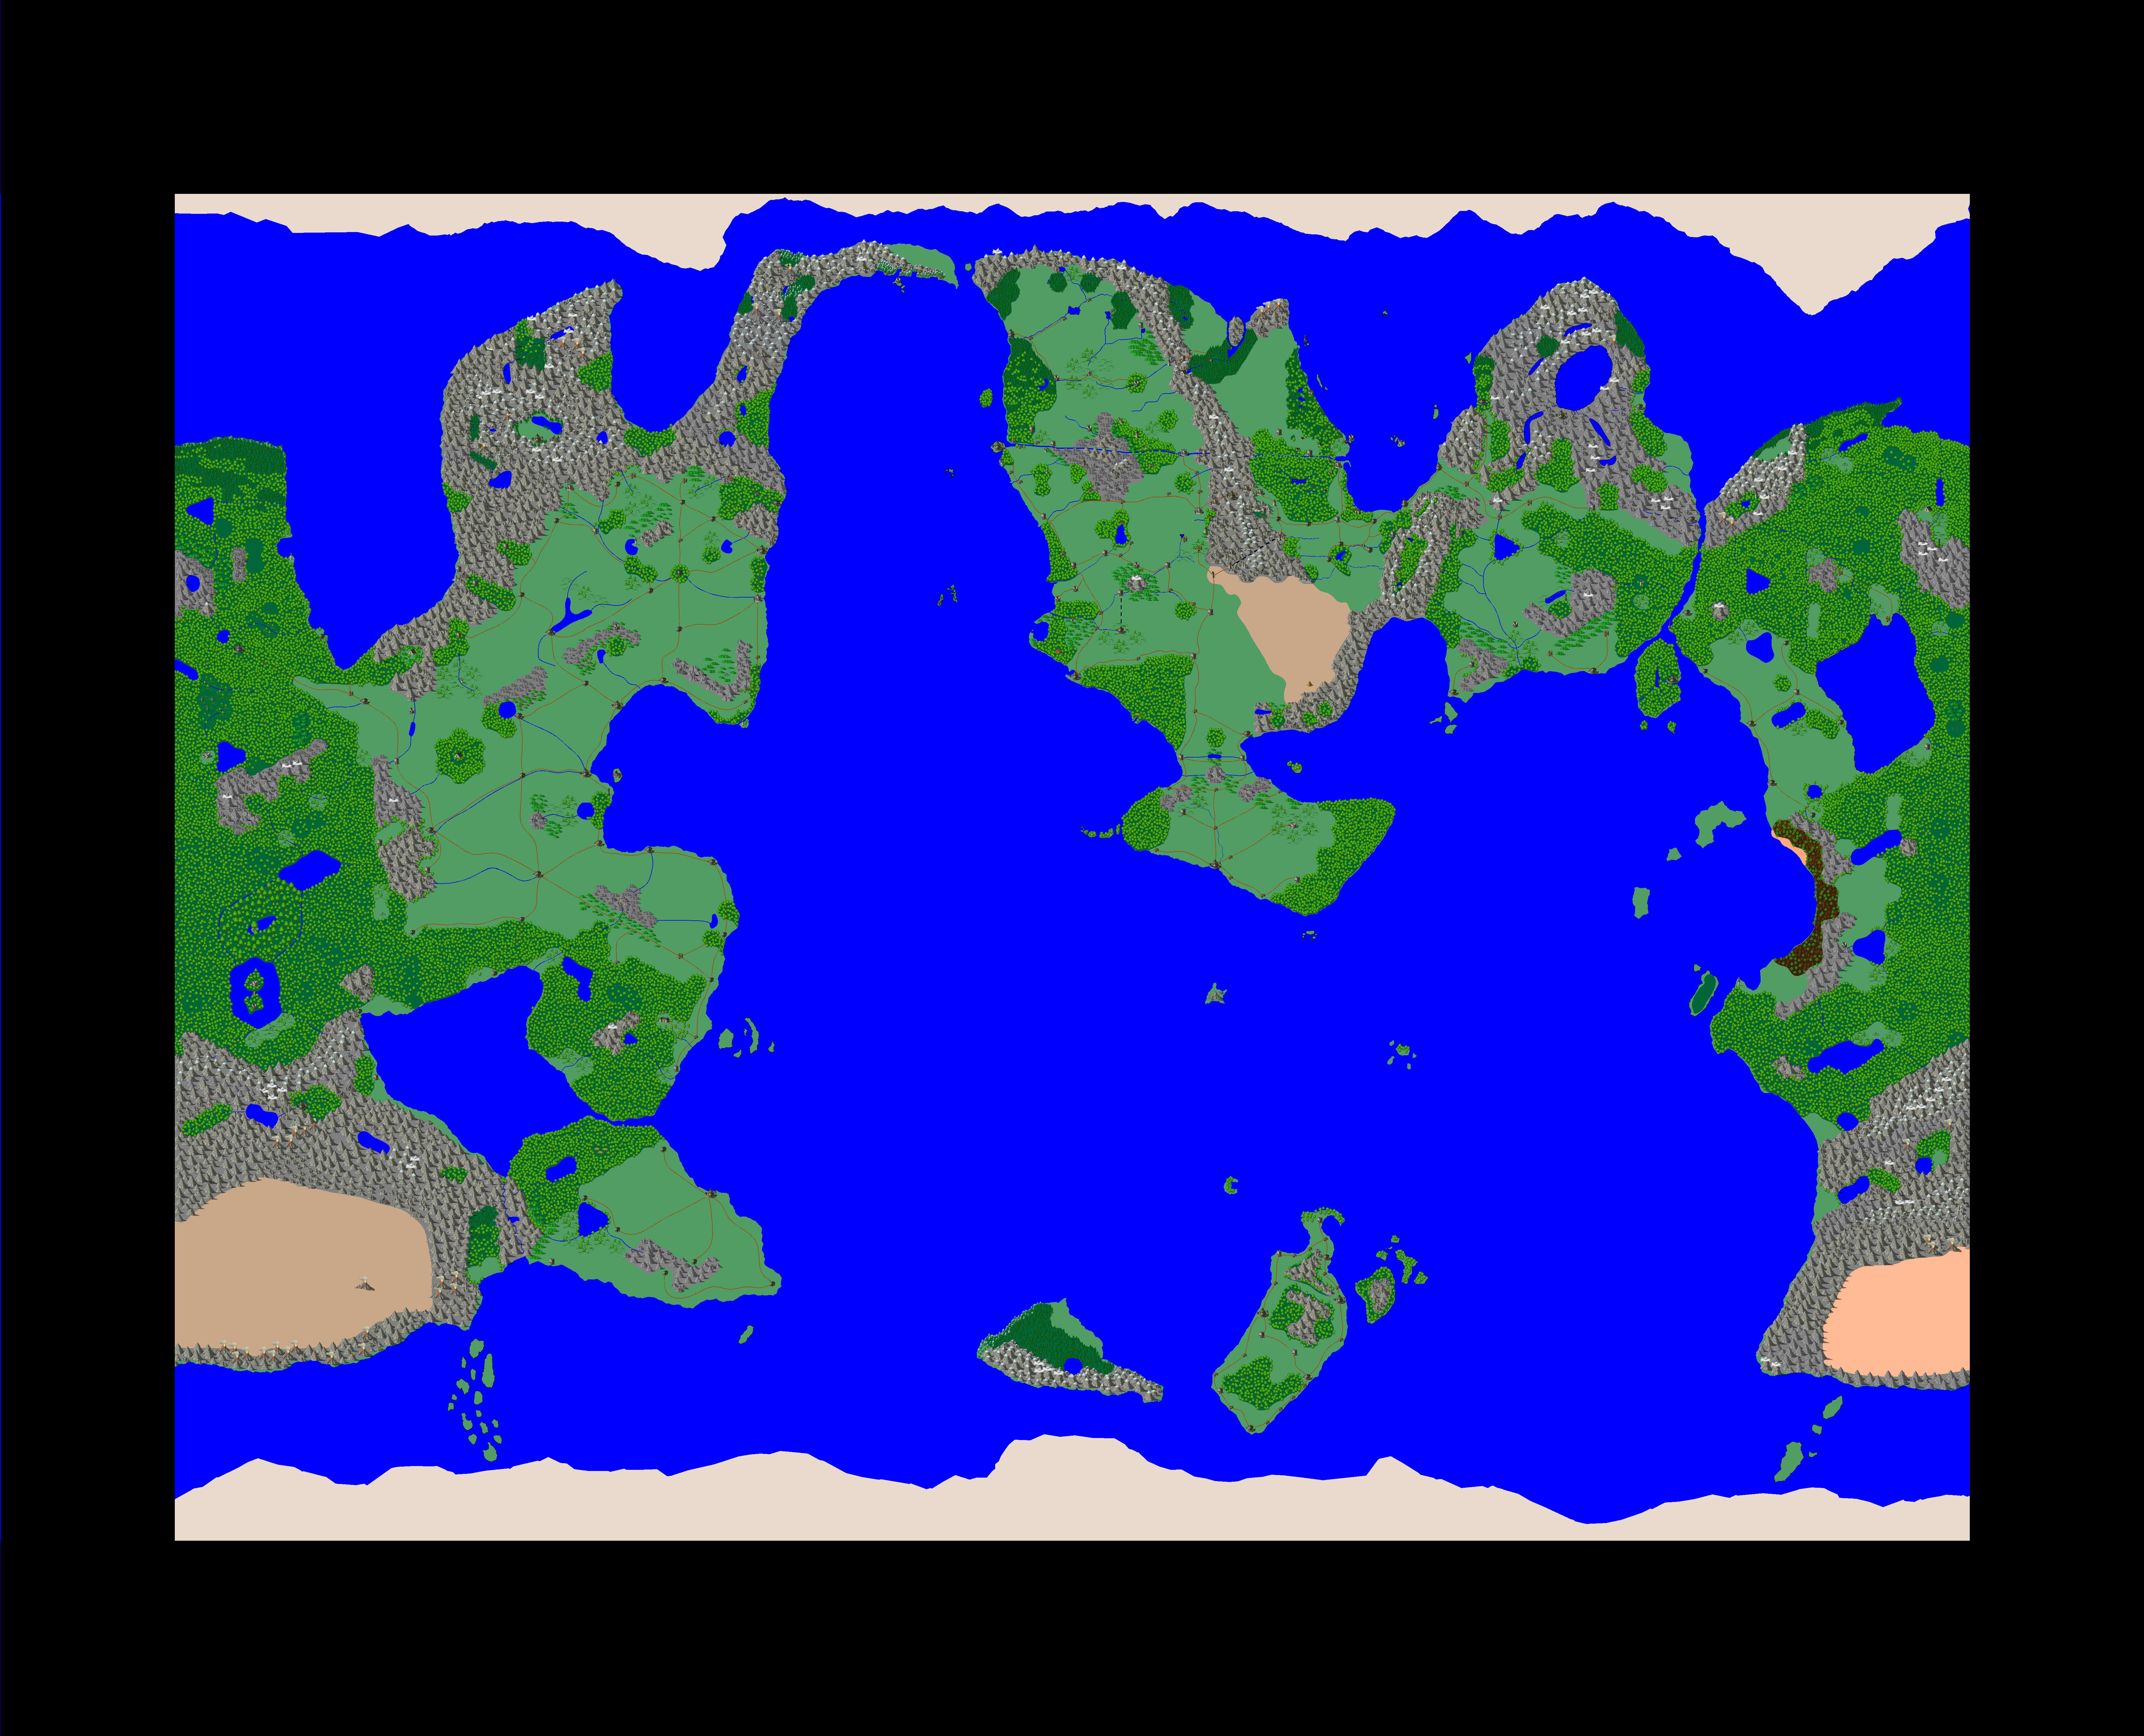 Map-realm nolabel.JPG